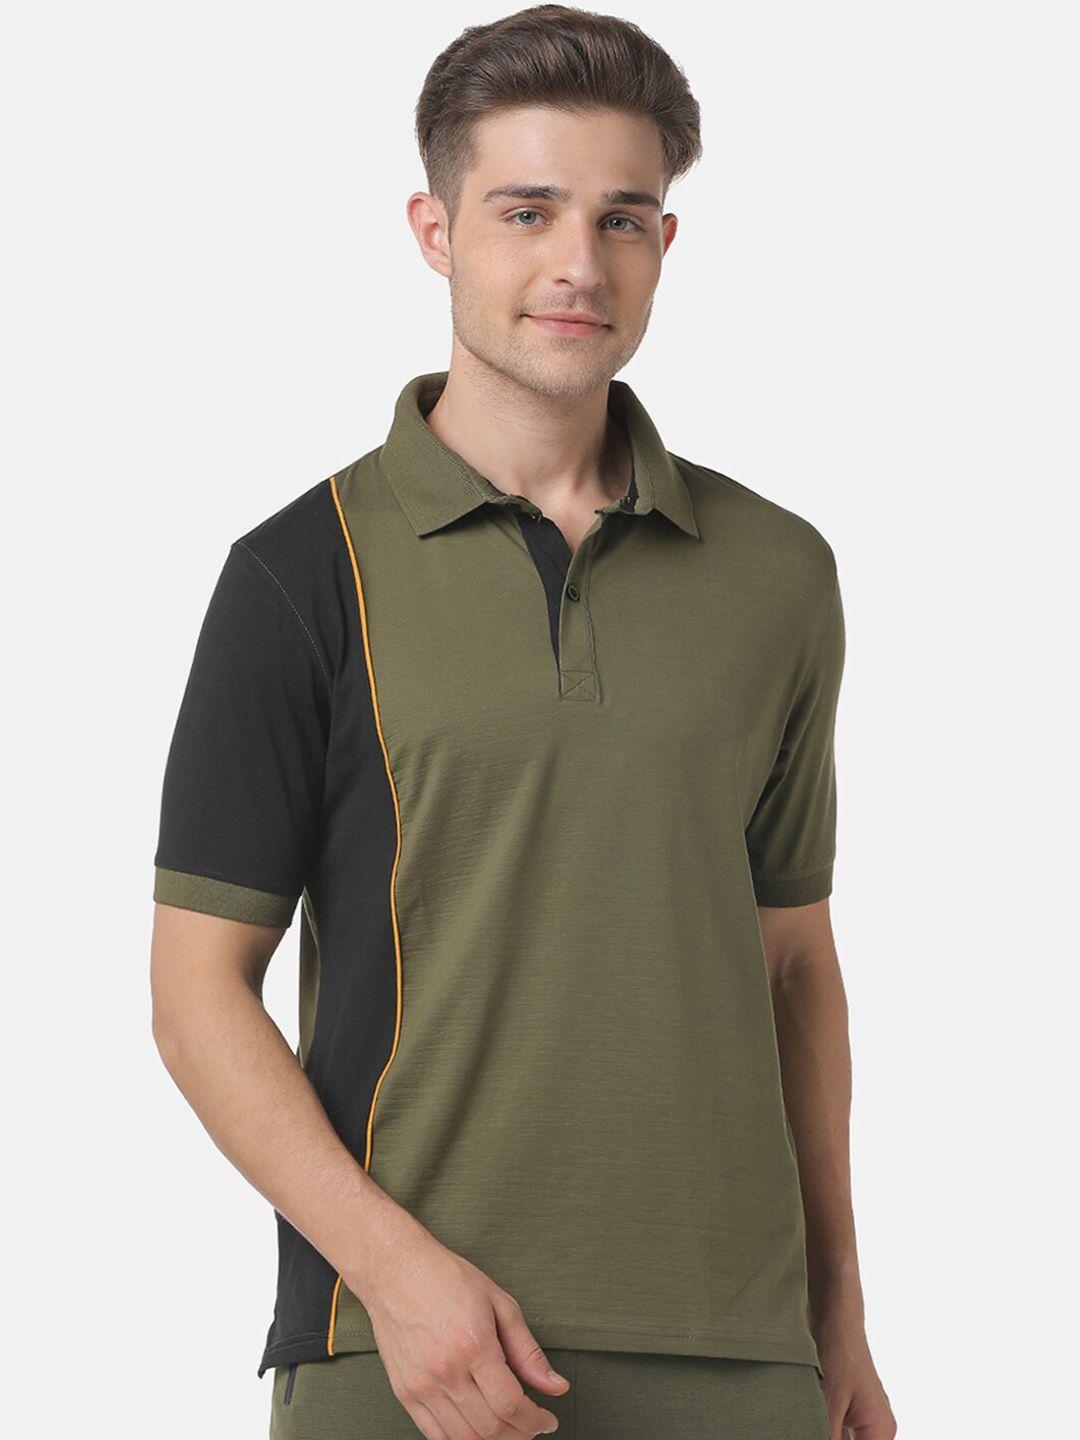 campus sutra men olive & black colourblocked polo collar t-shirt